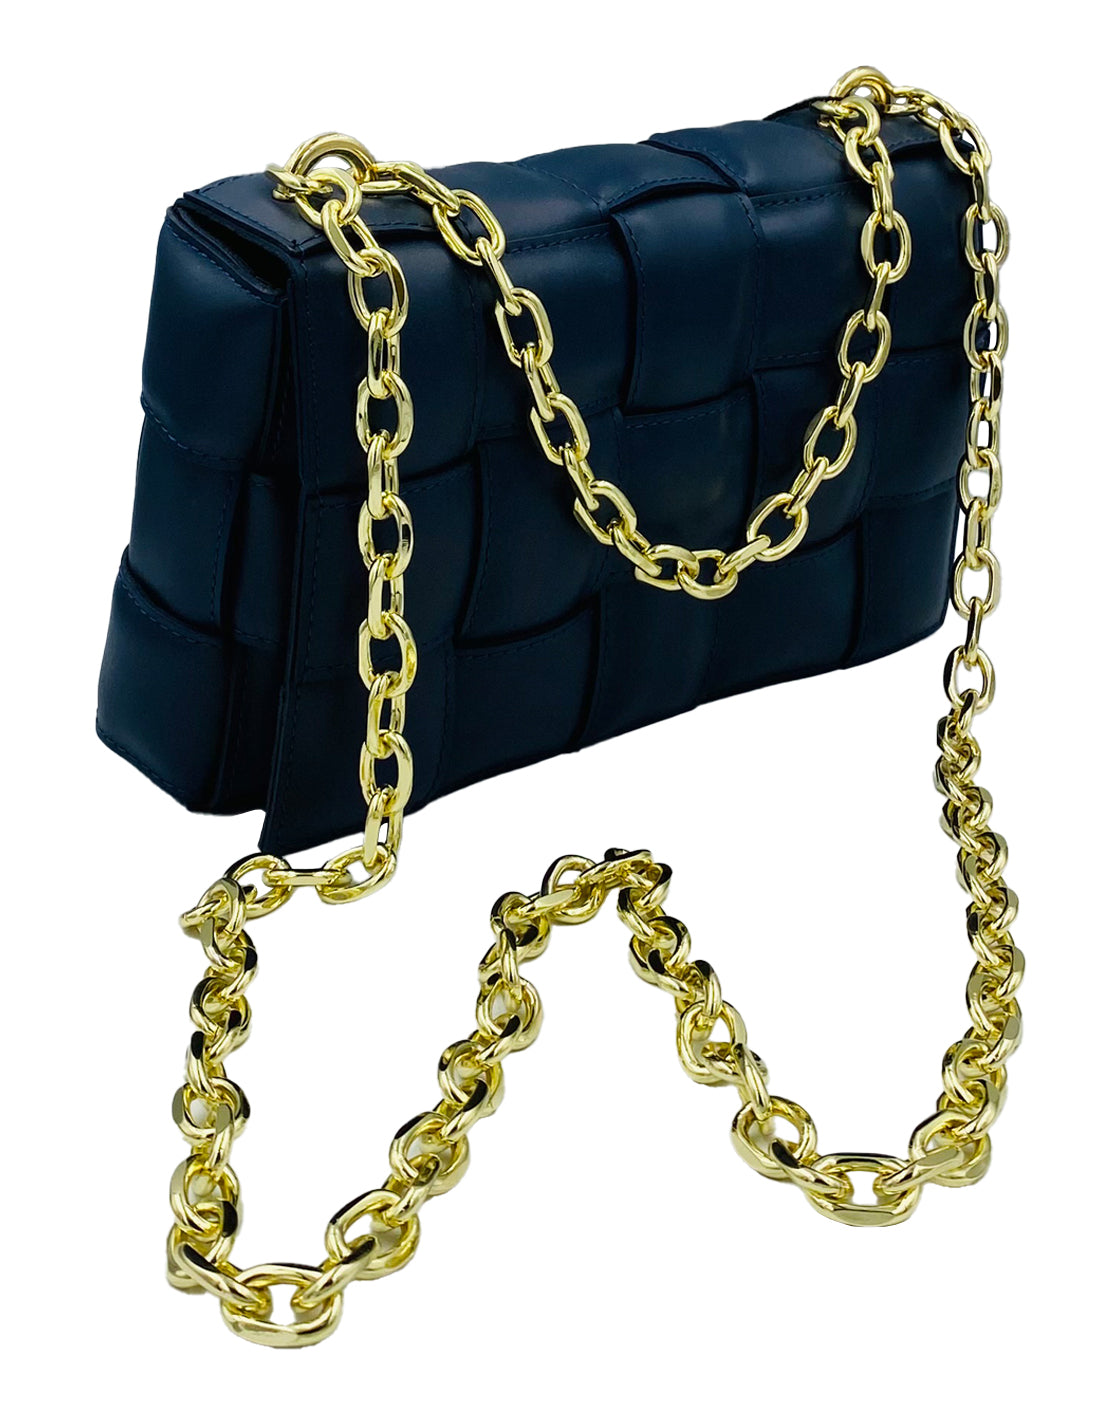 Braided Leather Handbag Navy Blue